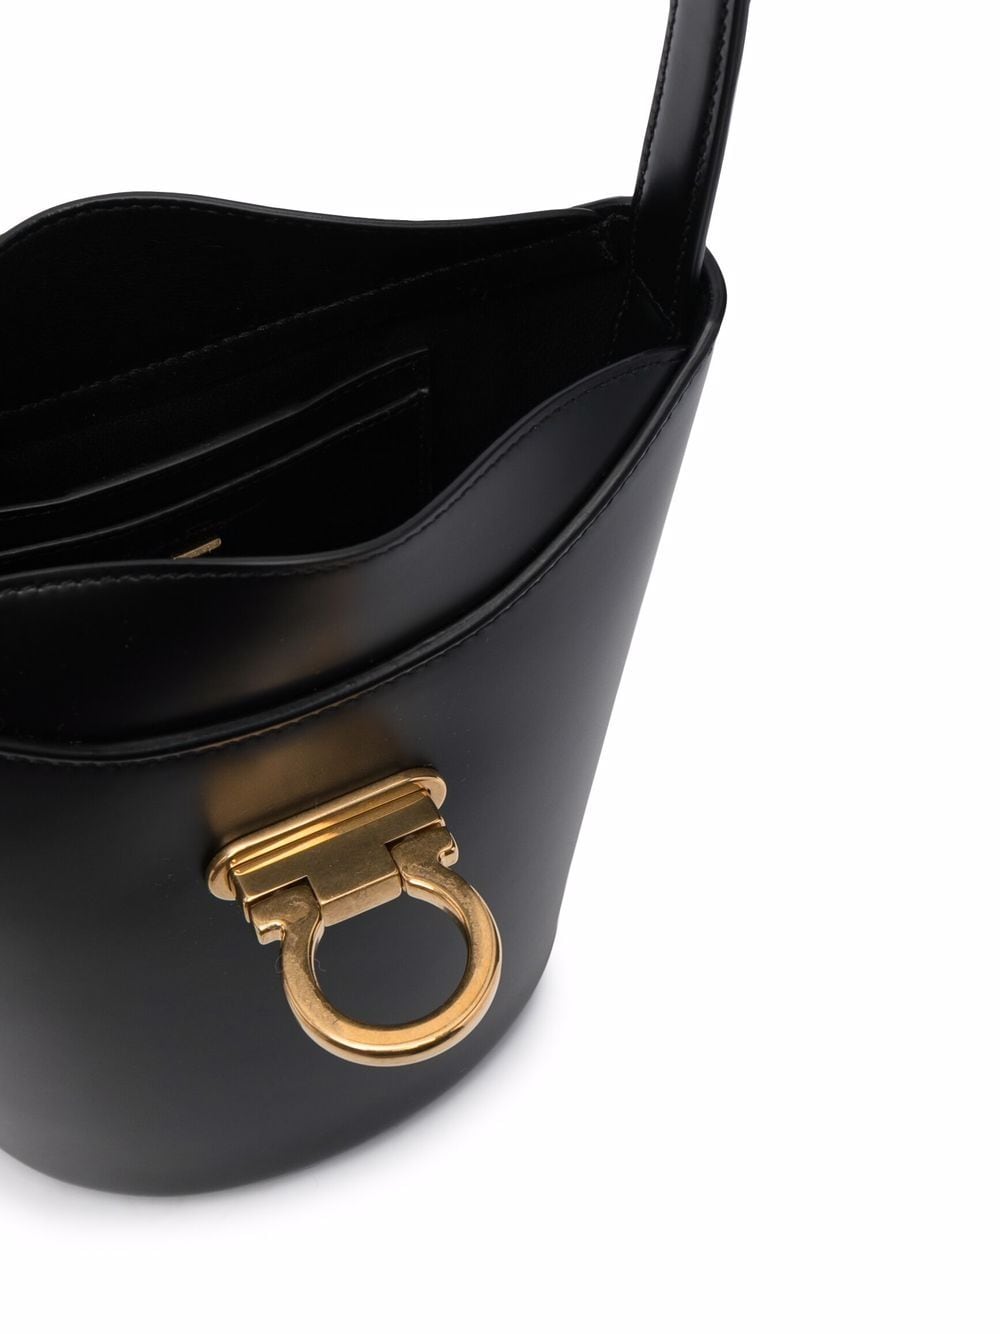 Shop Ferragamo Elegant Black Leather Bucket Handbag For Women